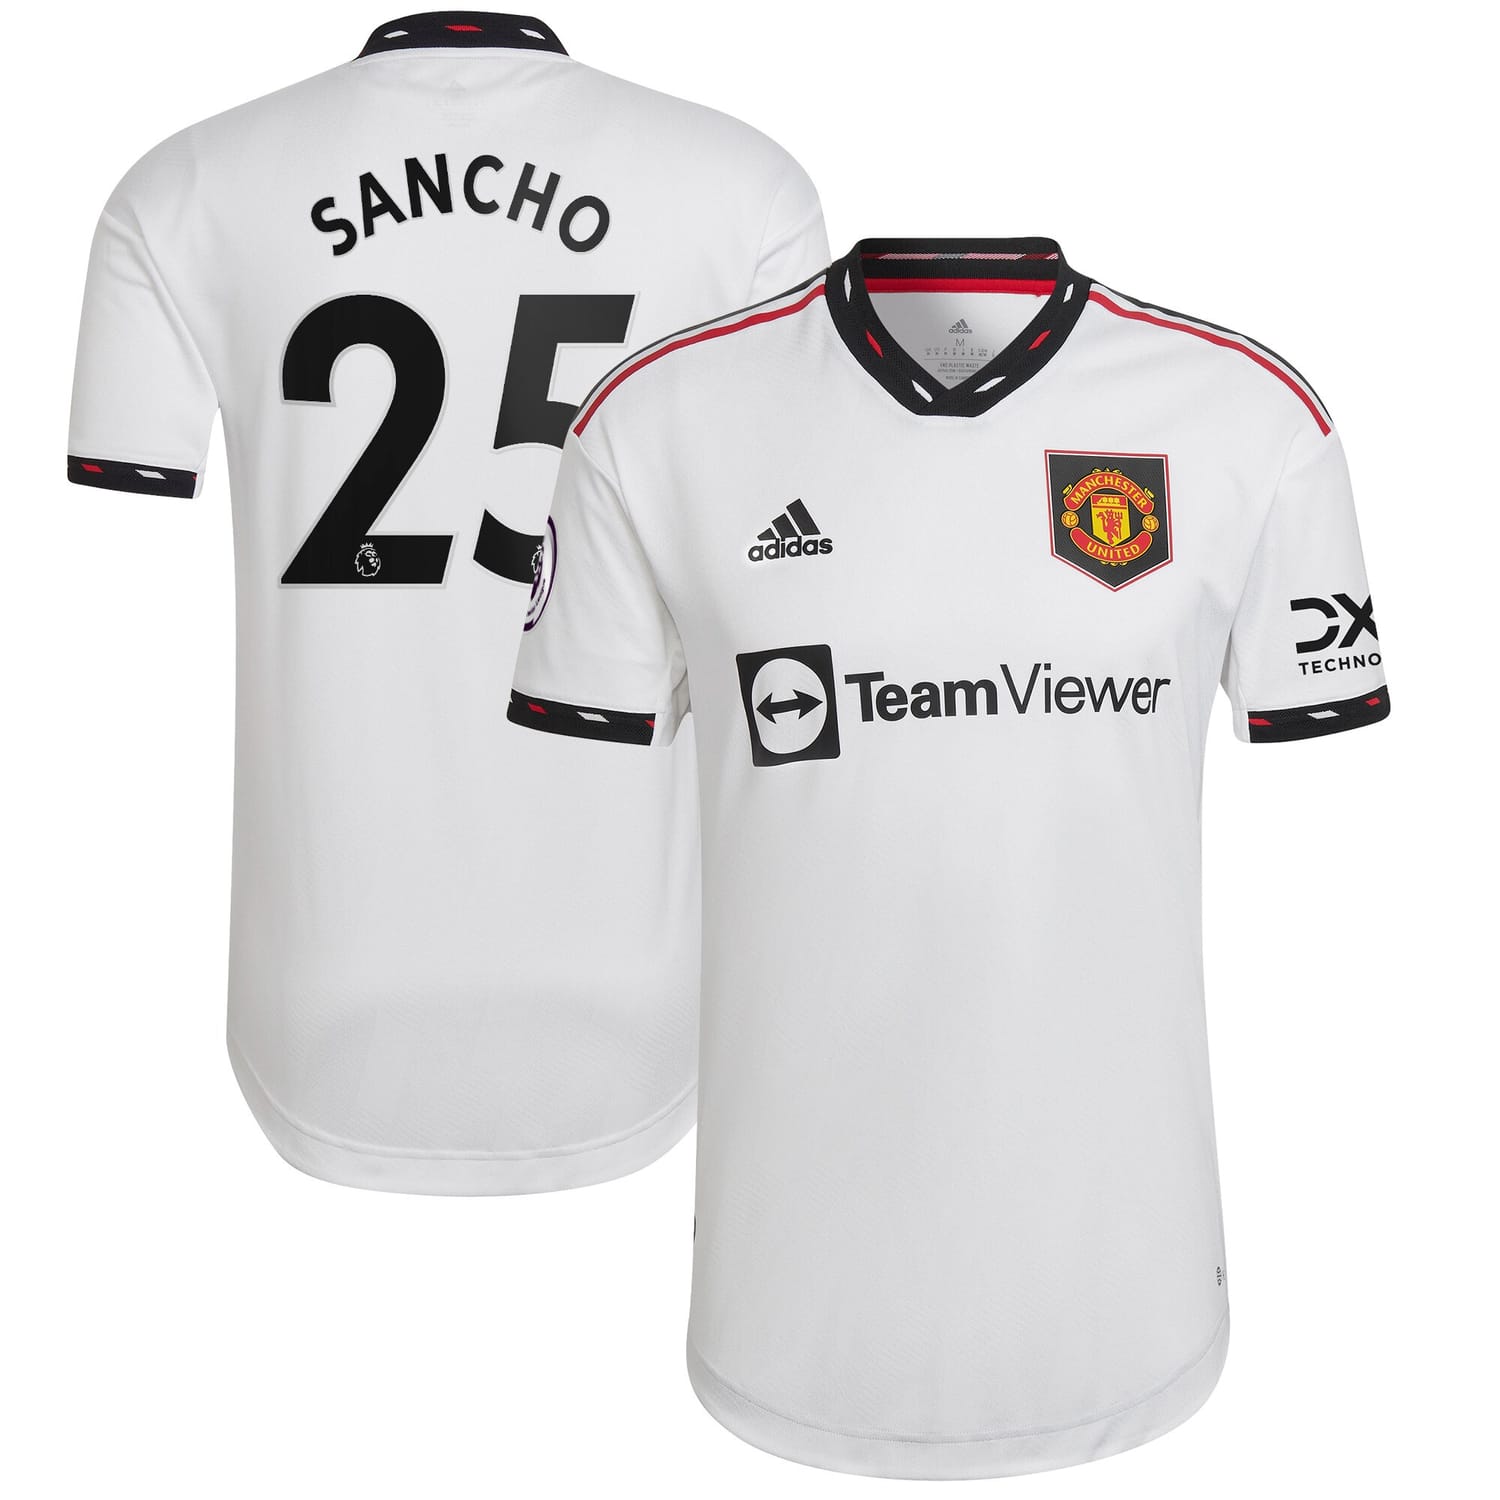 Premier League Manchester United Away Authentic Jersey Shirt White 2022-23 player Jadon Sancho printing for Men